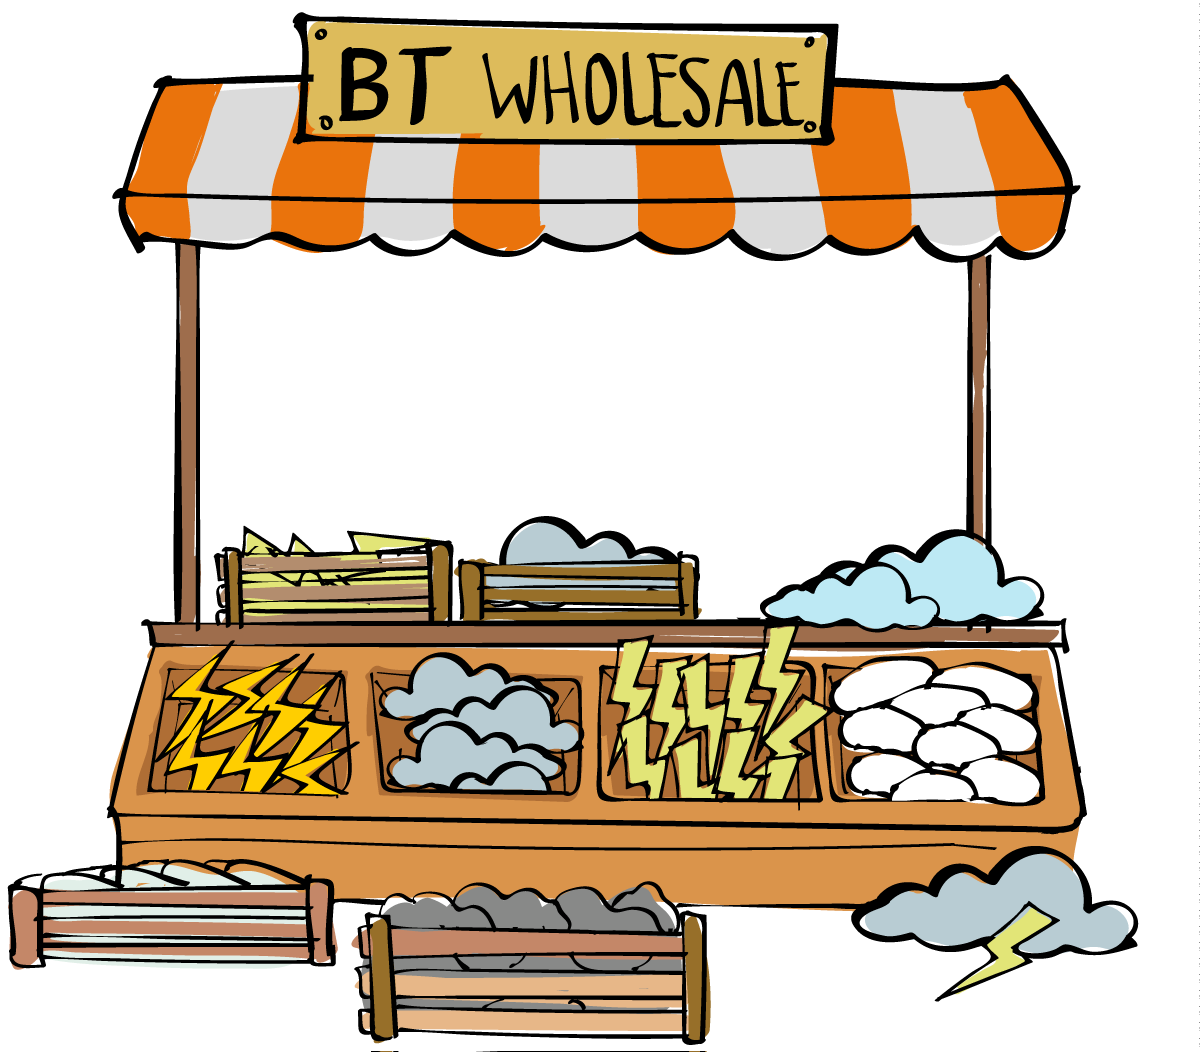 BT Wholesale Reseller vs Partner Channel